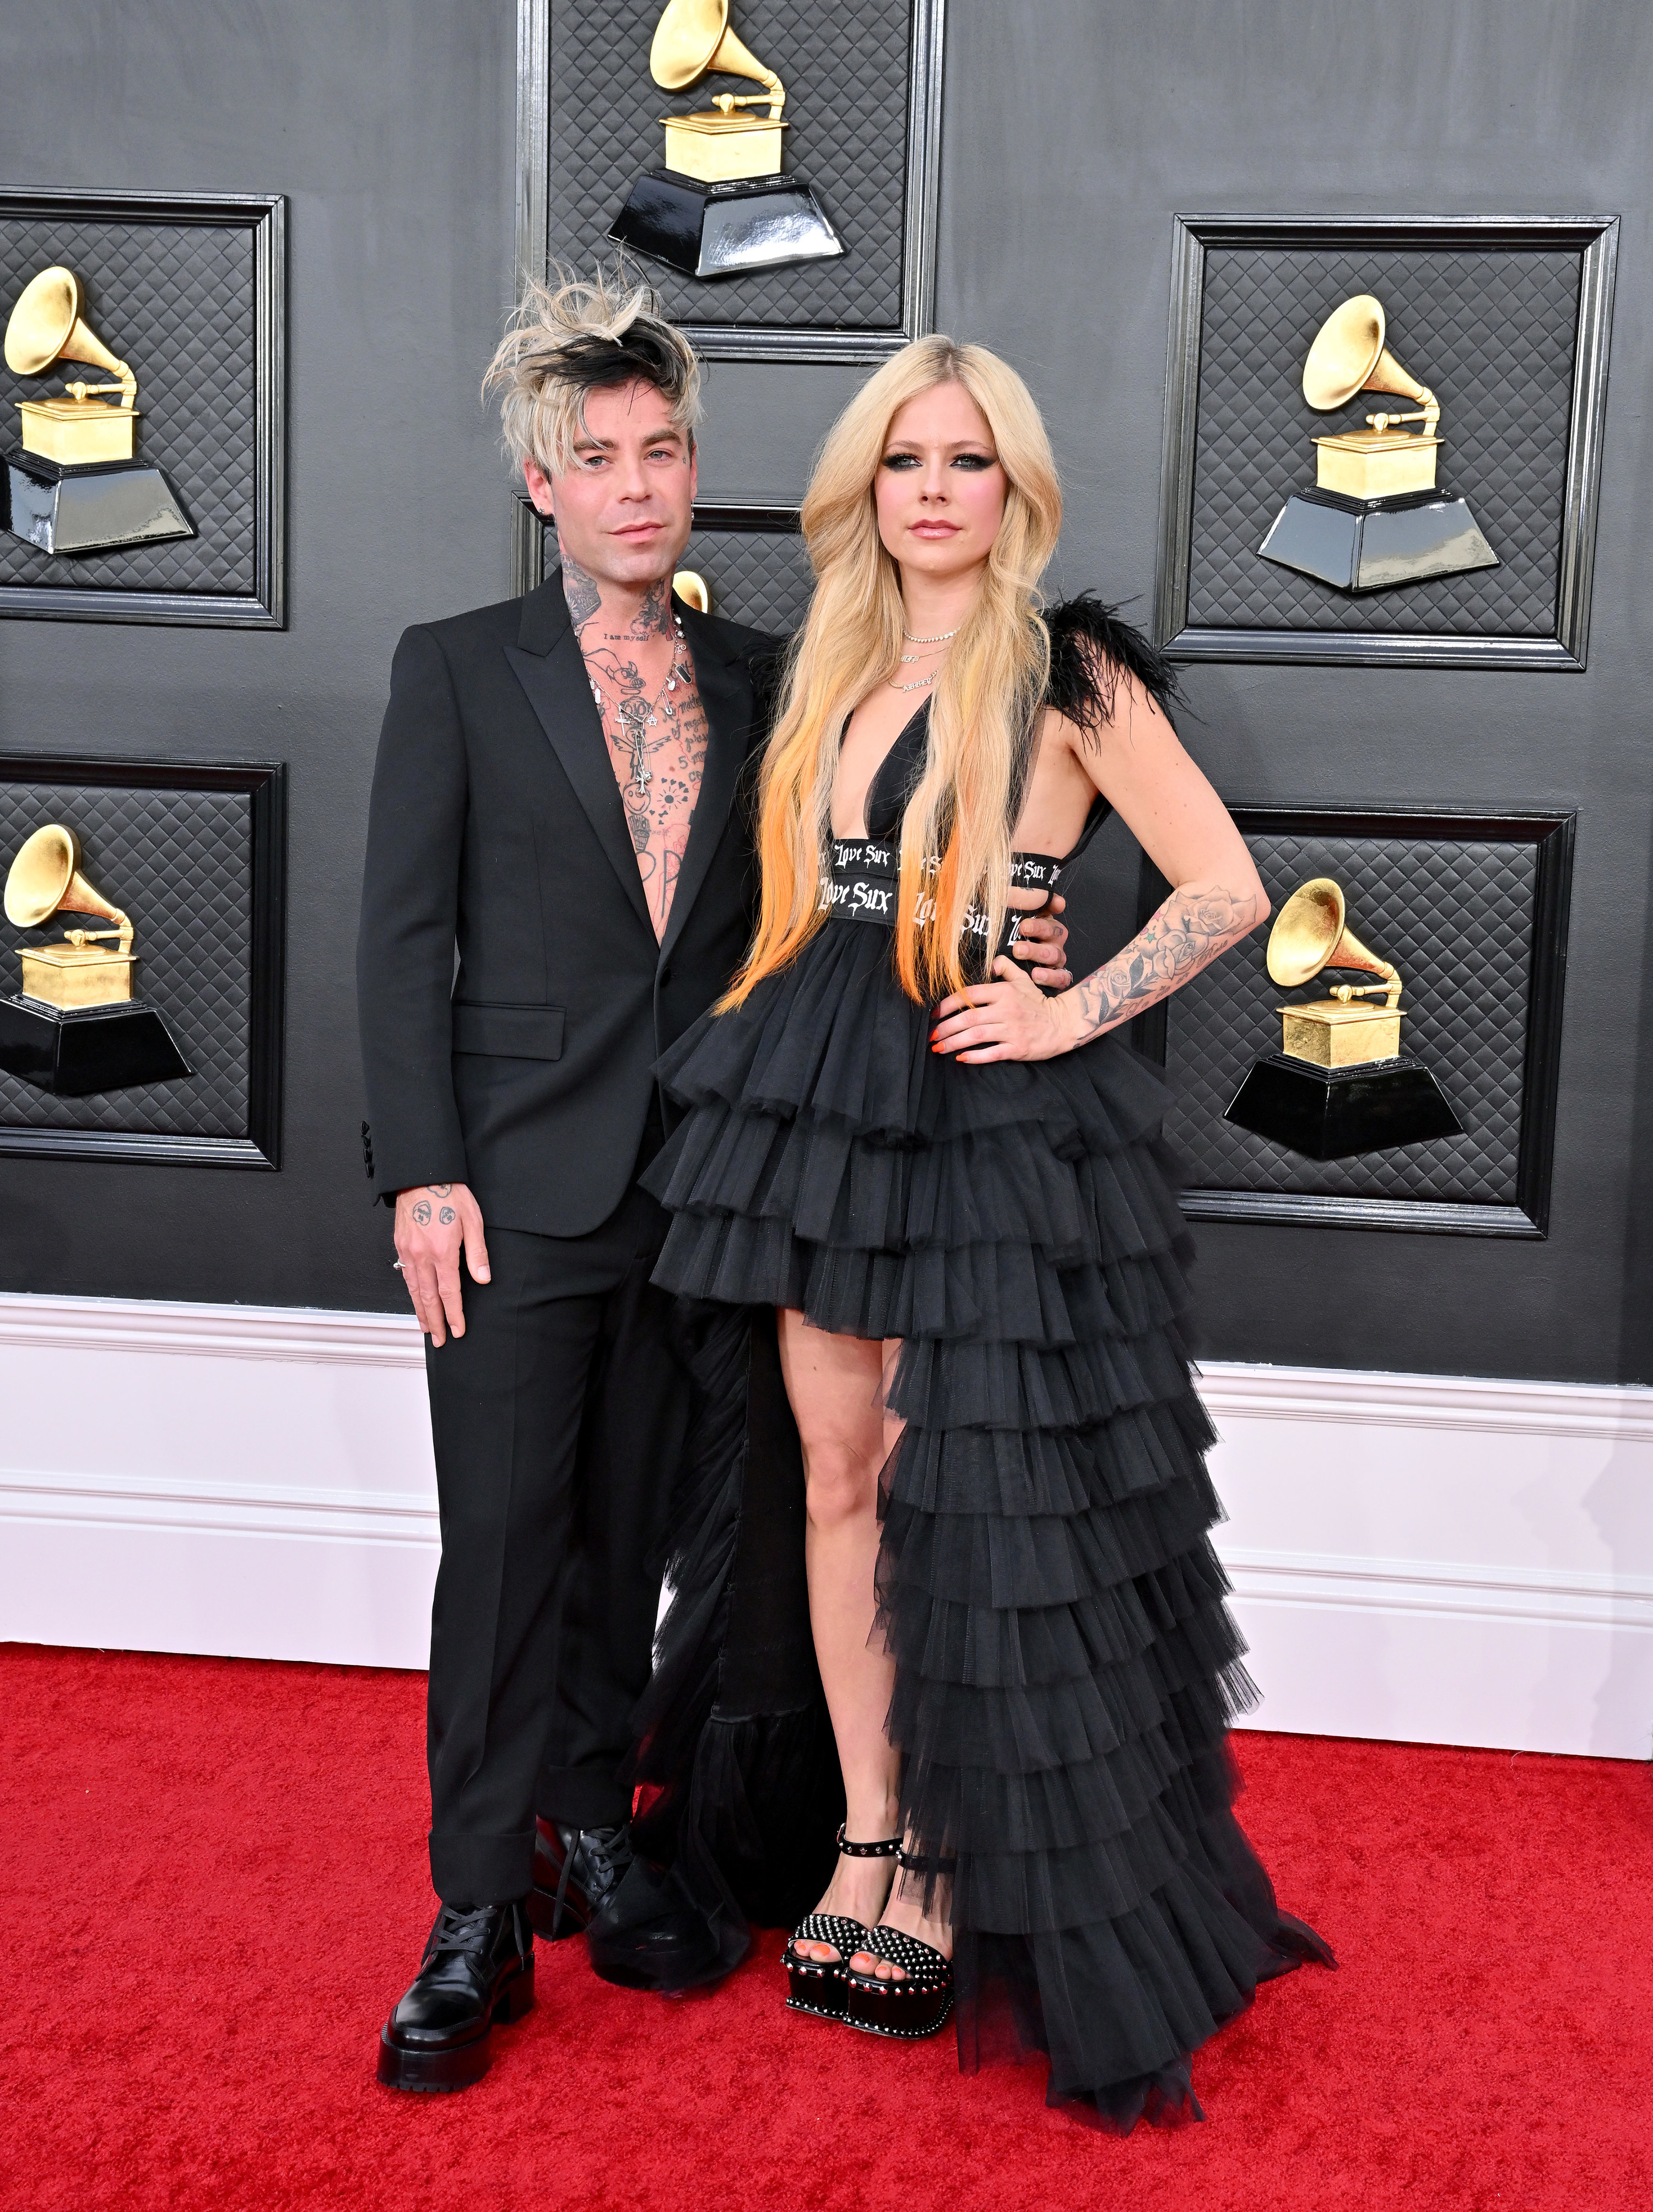 Avril Lavigne at the Grammys